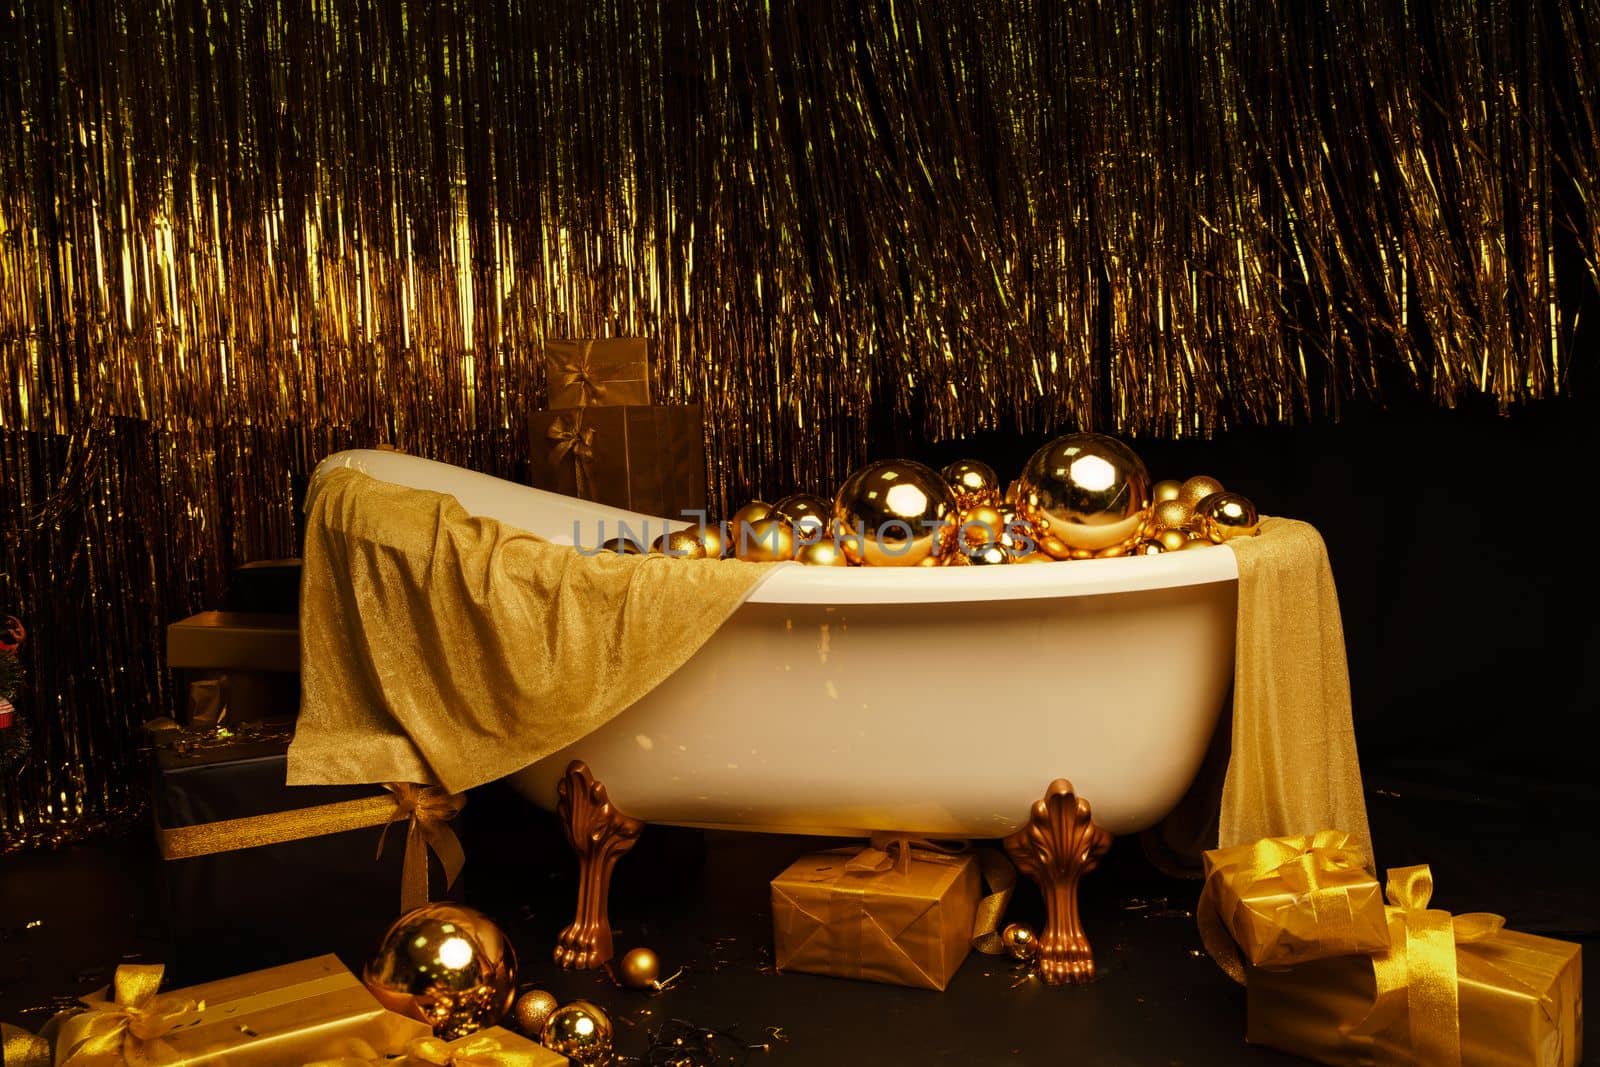 Bathtub full of golden balls. Vintage bright bathroom decorated with festive golden balls. New Year, Christmas bathroom interior